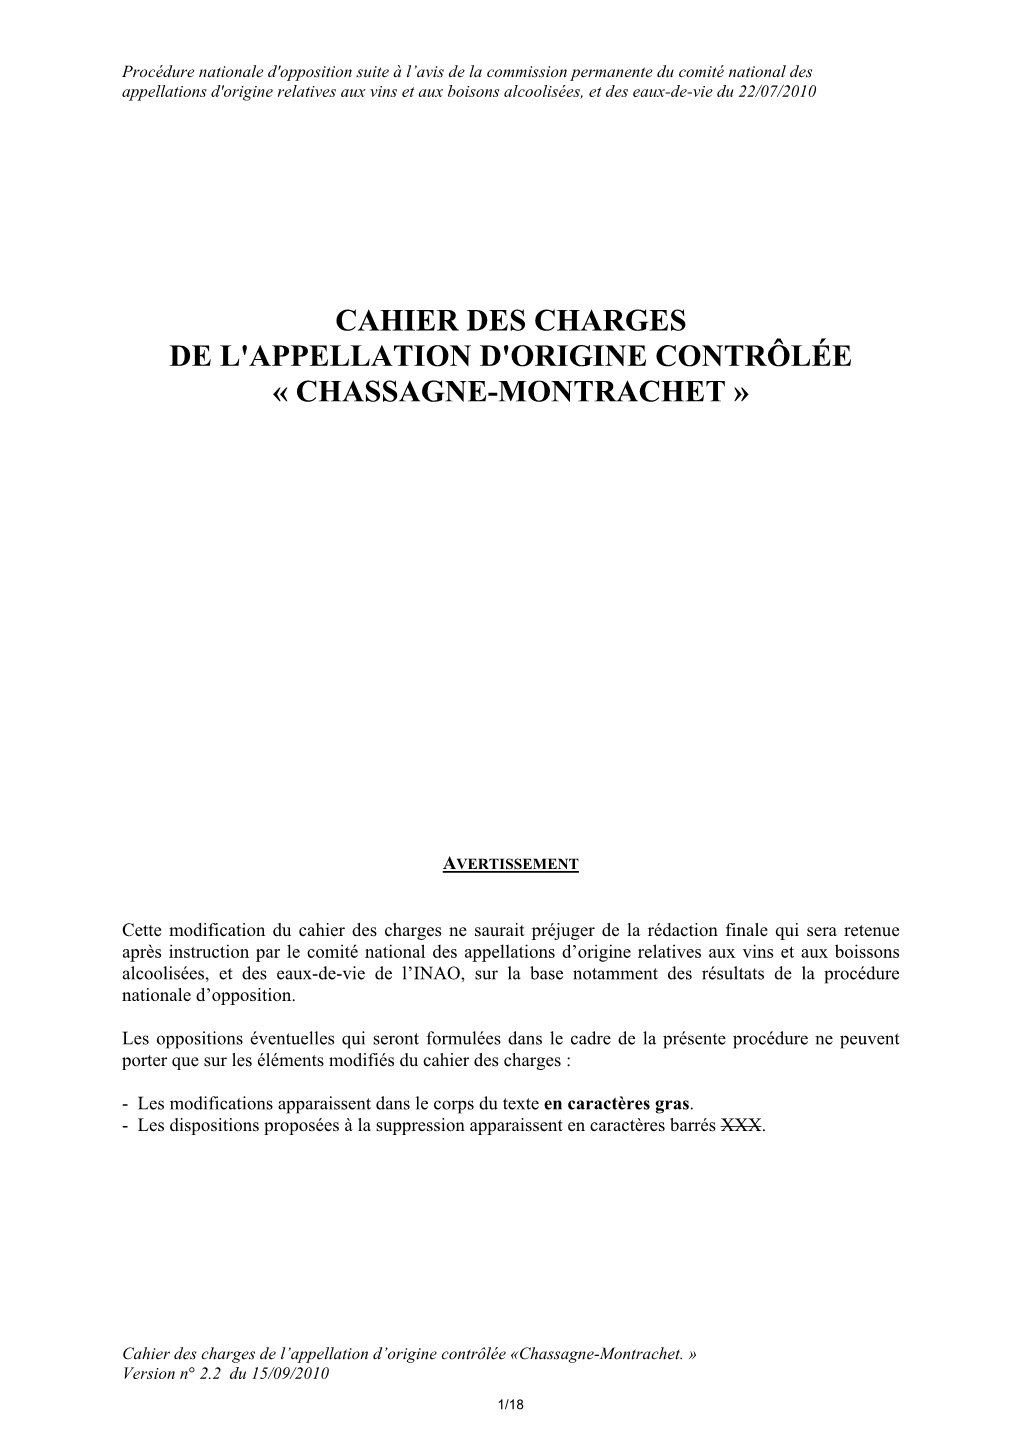 Chassagne-Montrachet »